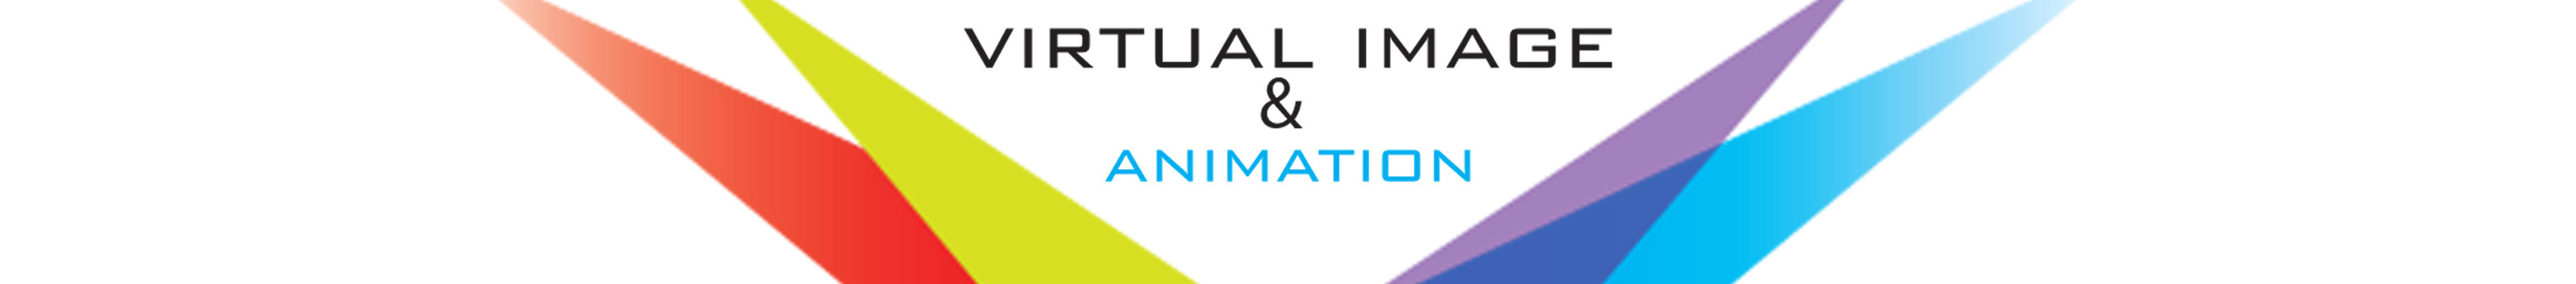 Virtual Image & Animation's profile banner